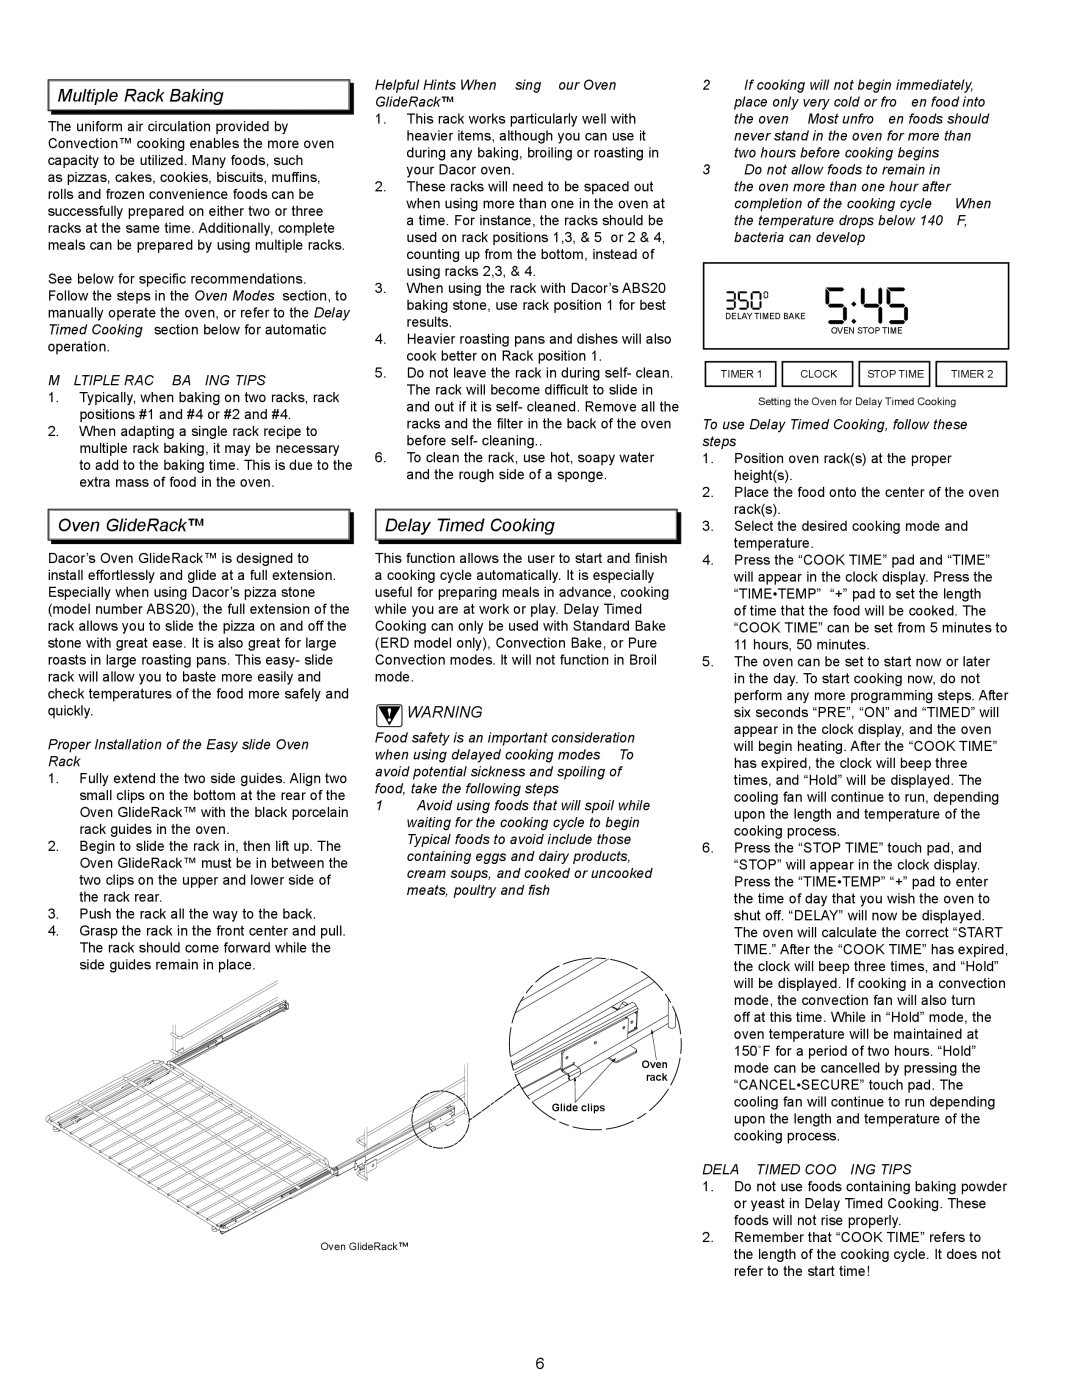 Dacor EpicureTM manual Oven GlideRack, Multiple Rack Baking Tips, Delay Timed Cooking Tips 